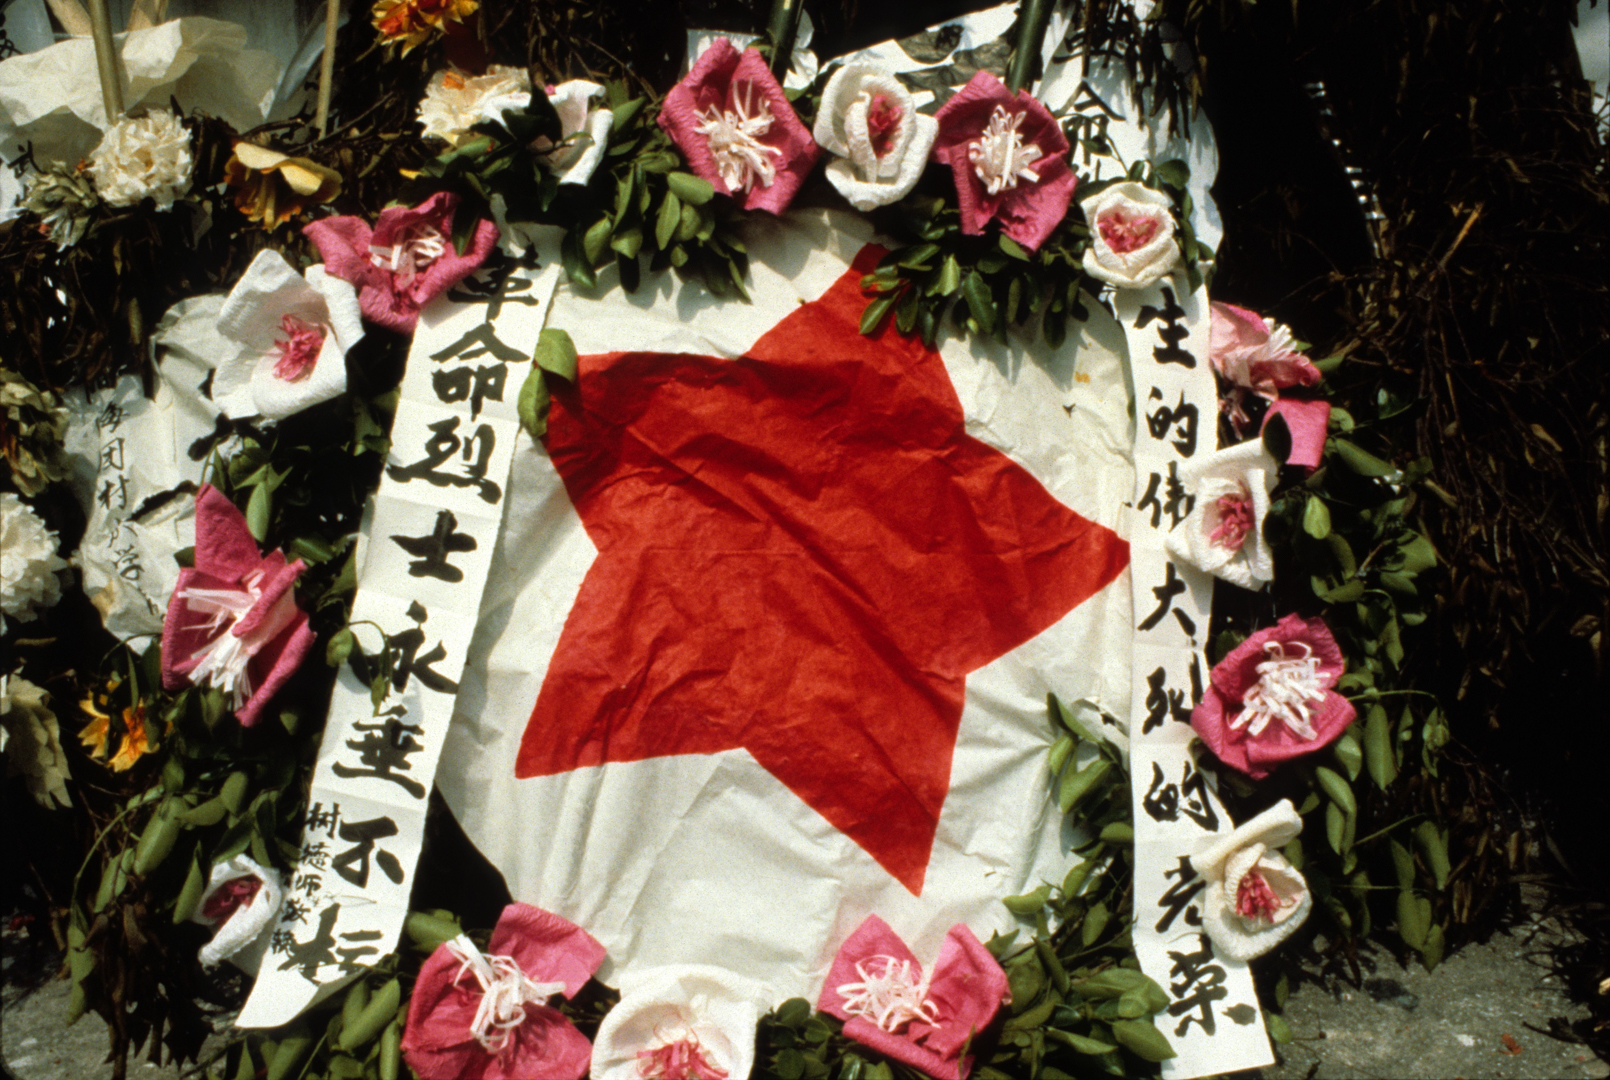 Wreath, China 1982 (22 x 14.75)